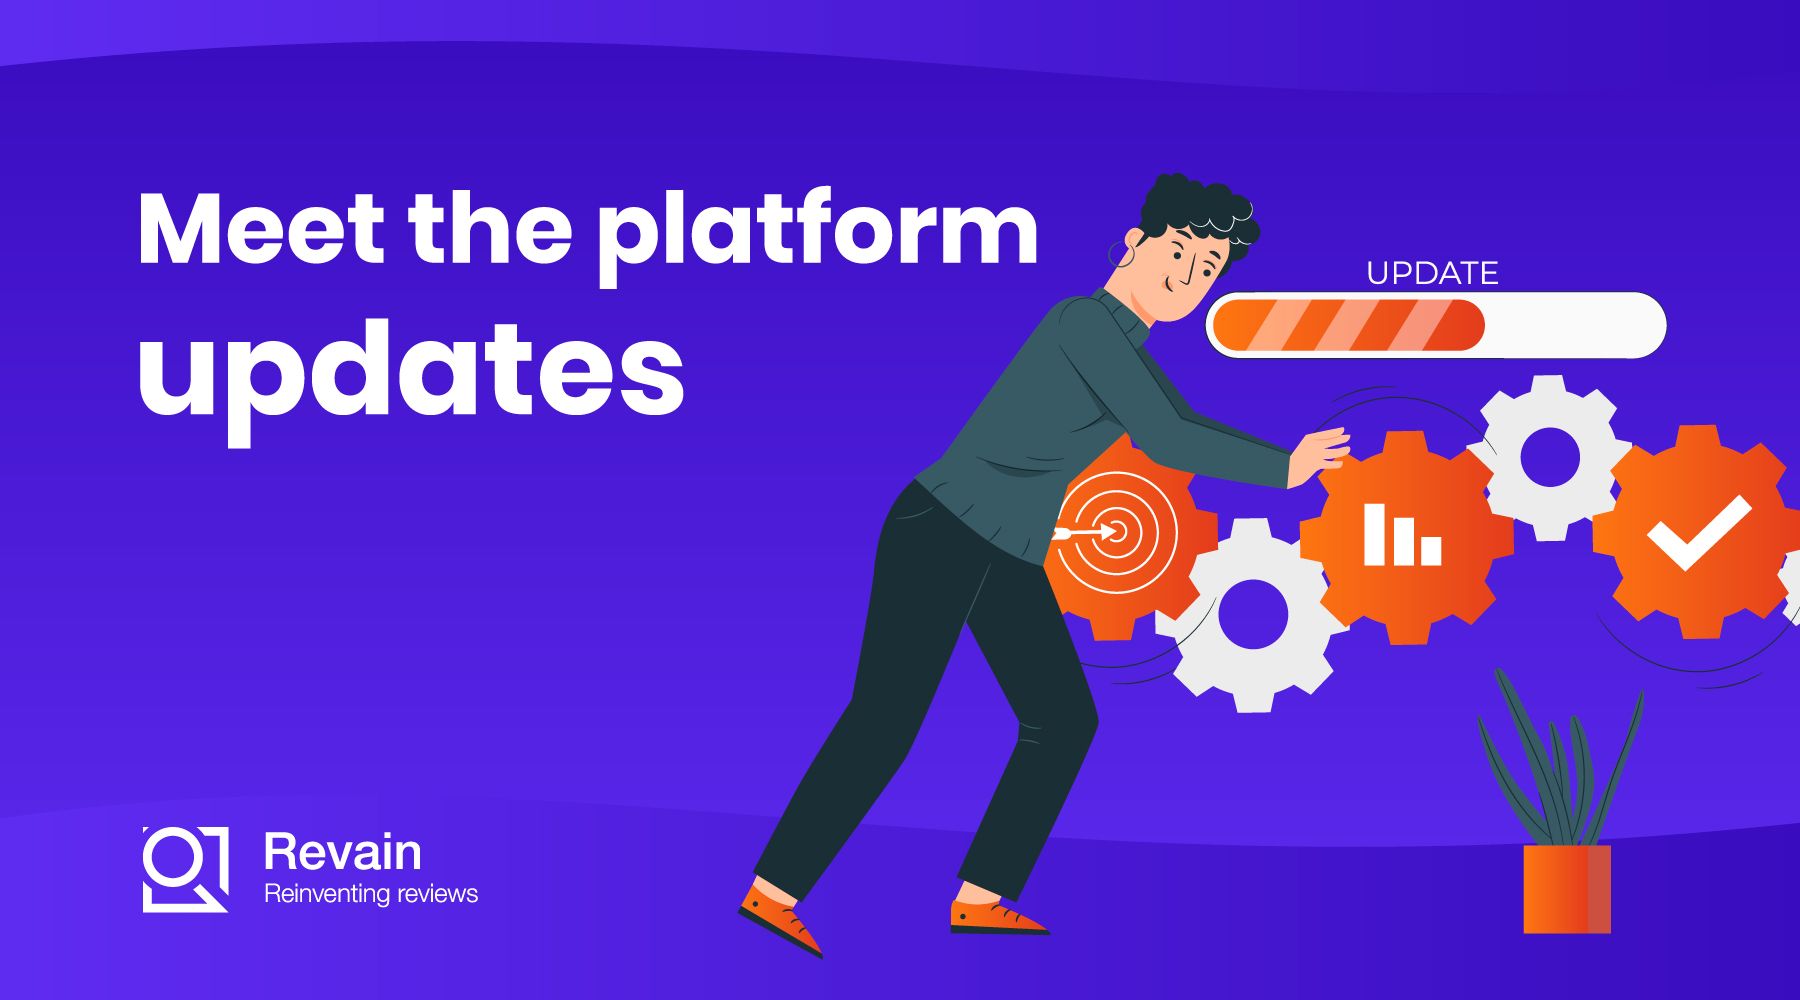 Article Meet the platform updates!